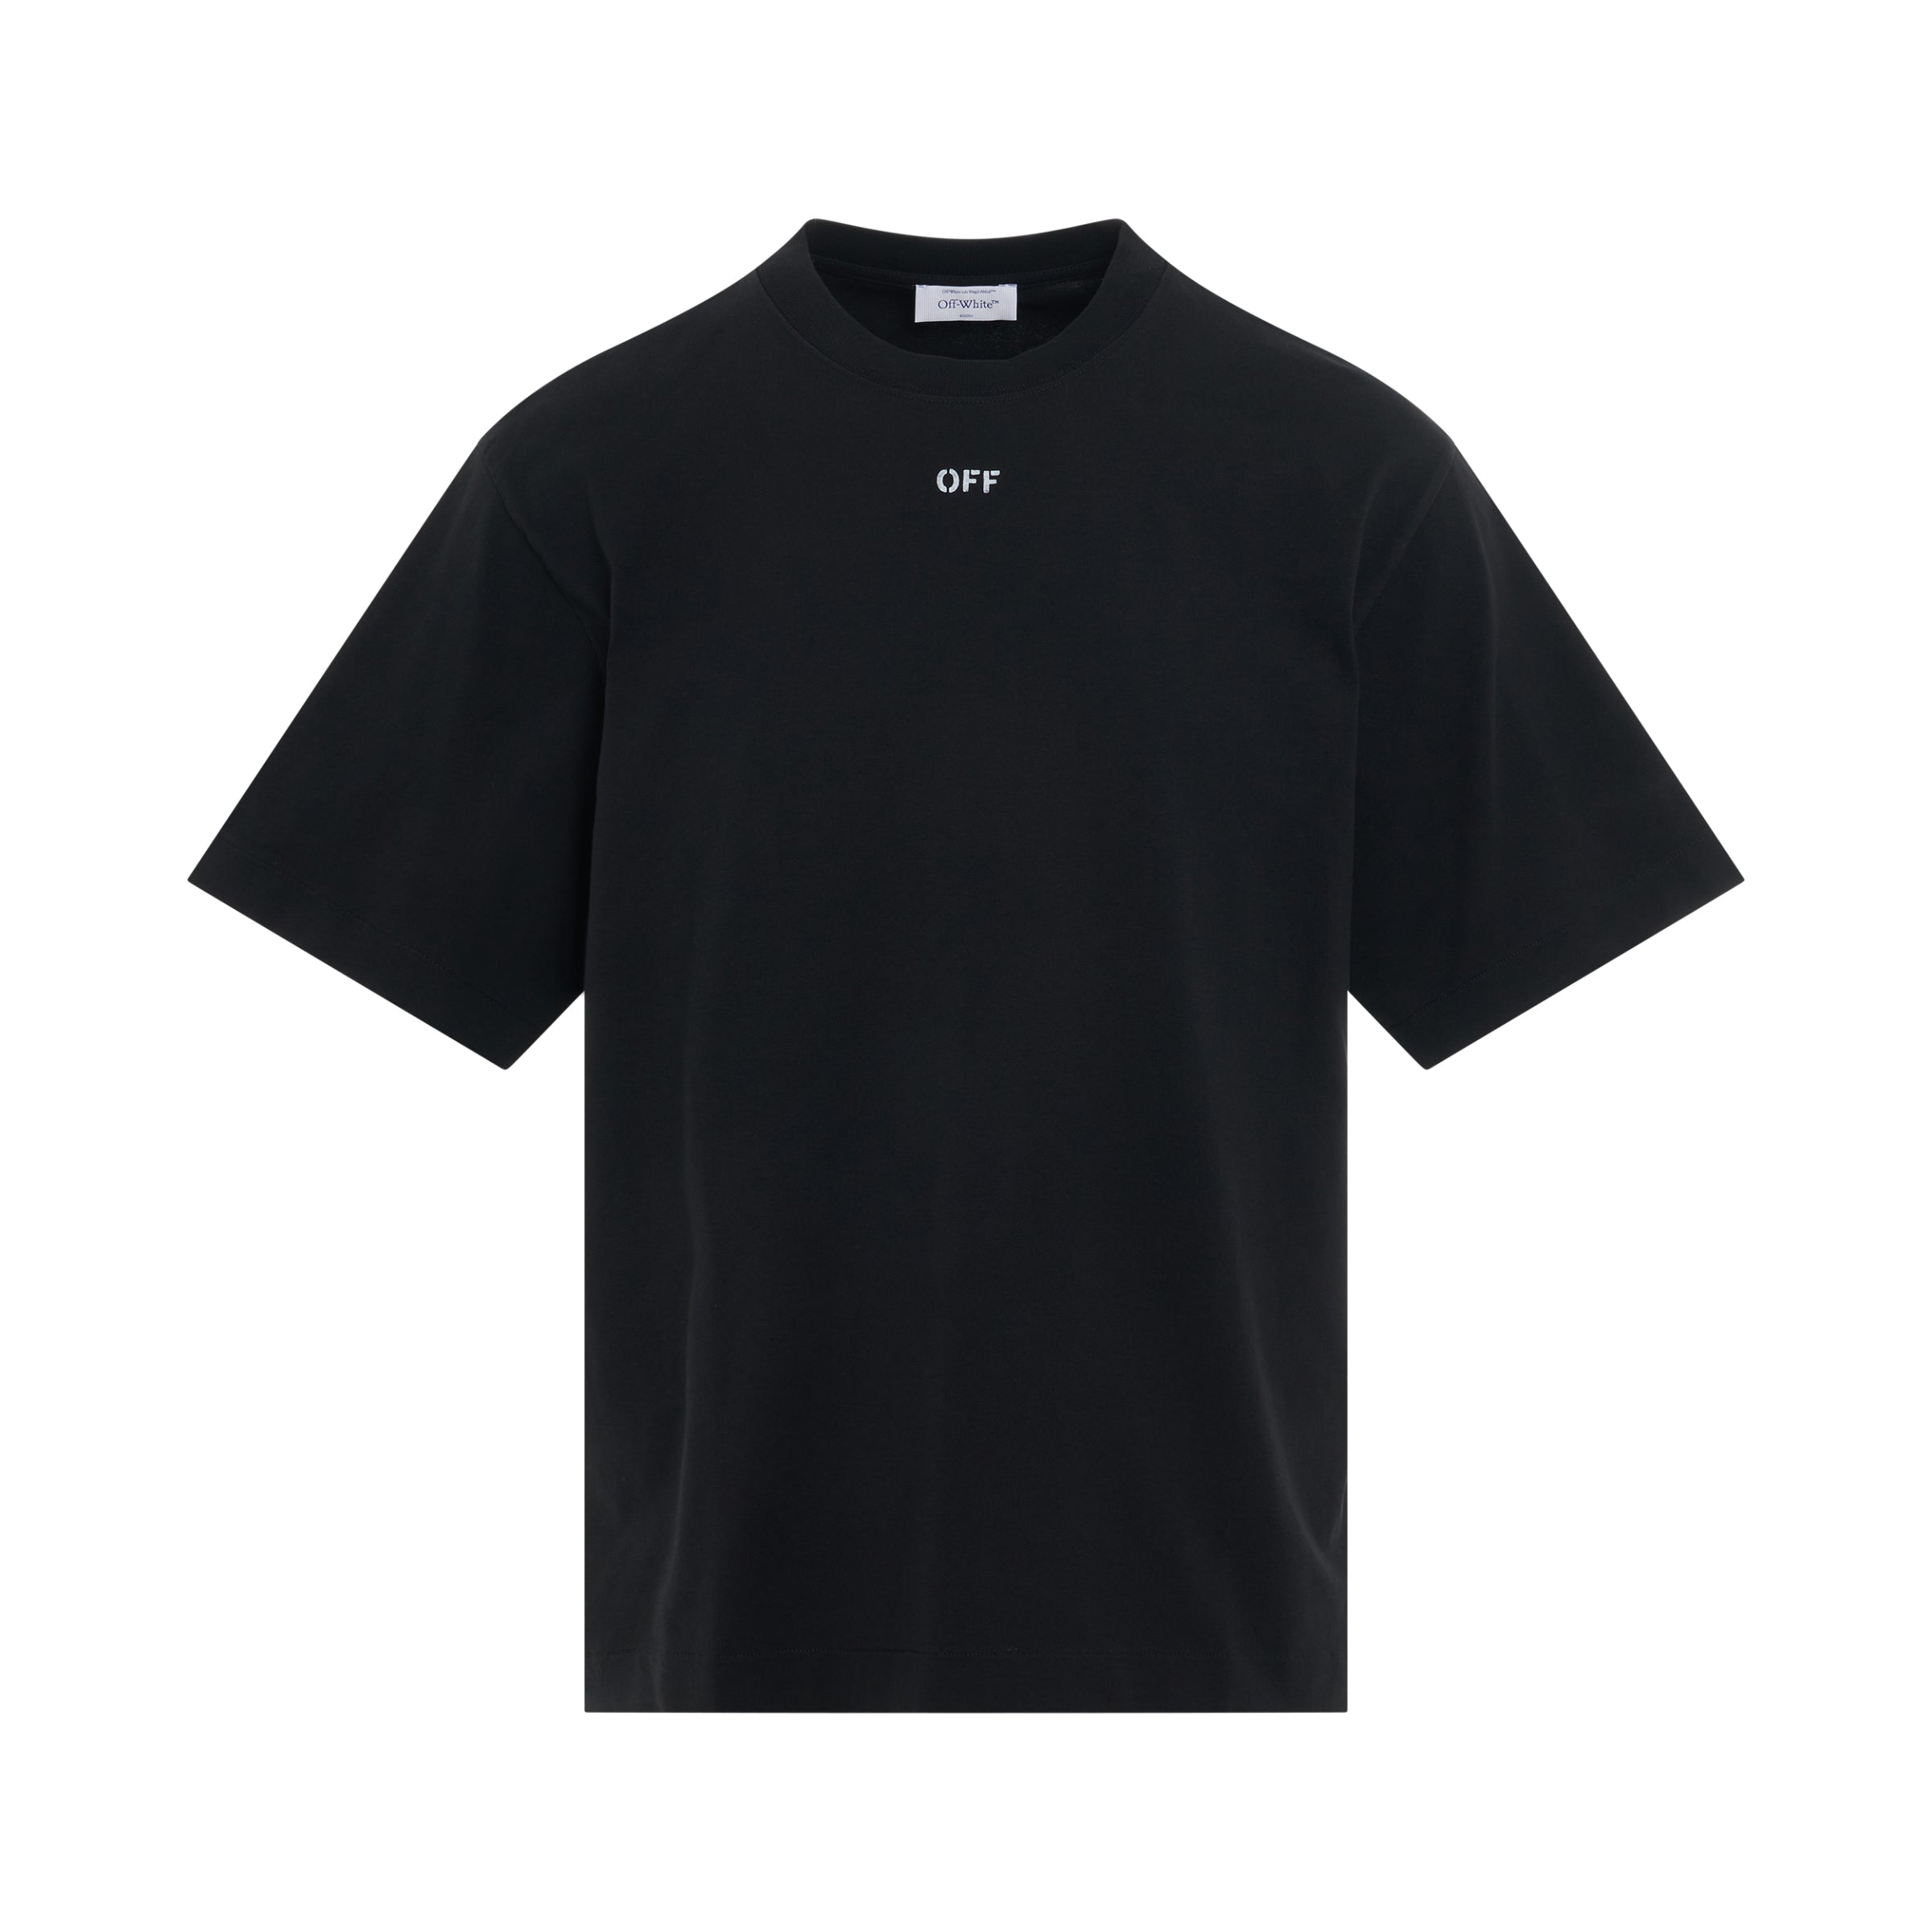 Off Stamp Skate Fit T-Shirt in Black